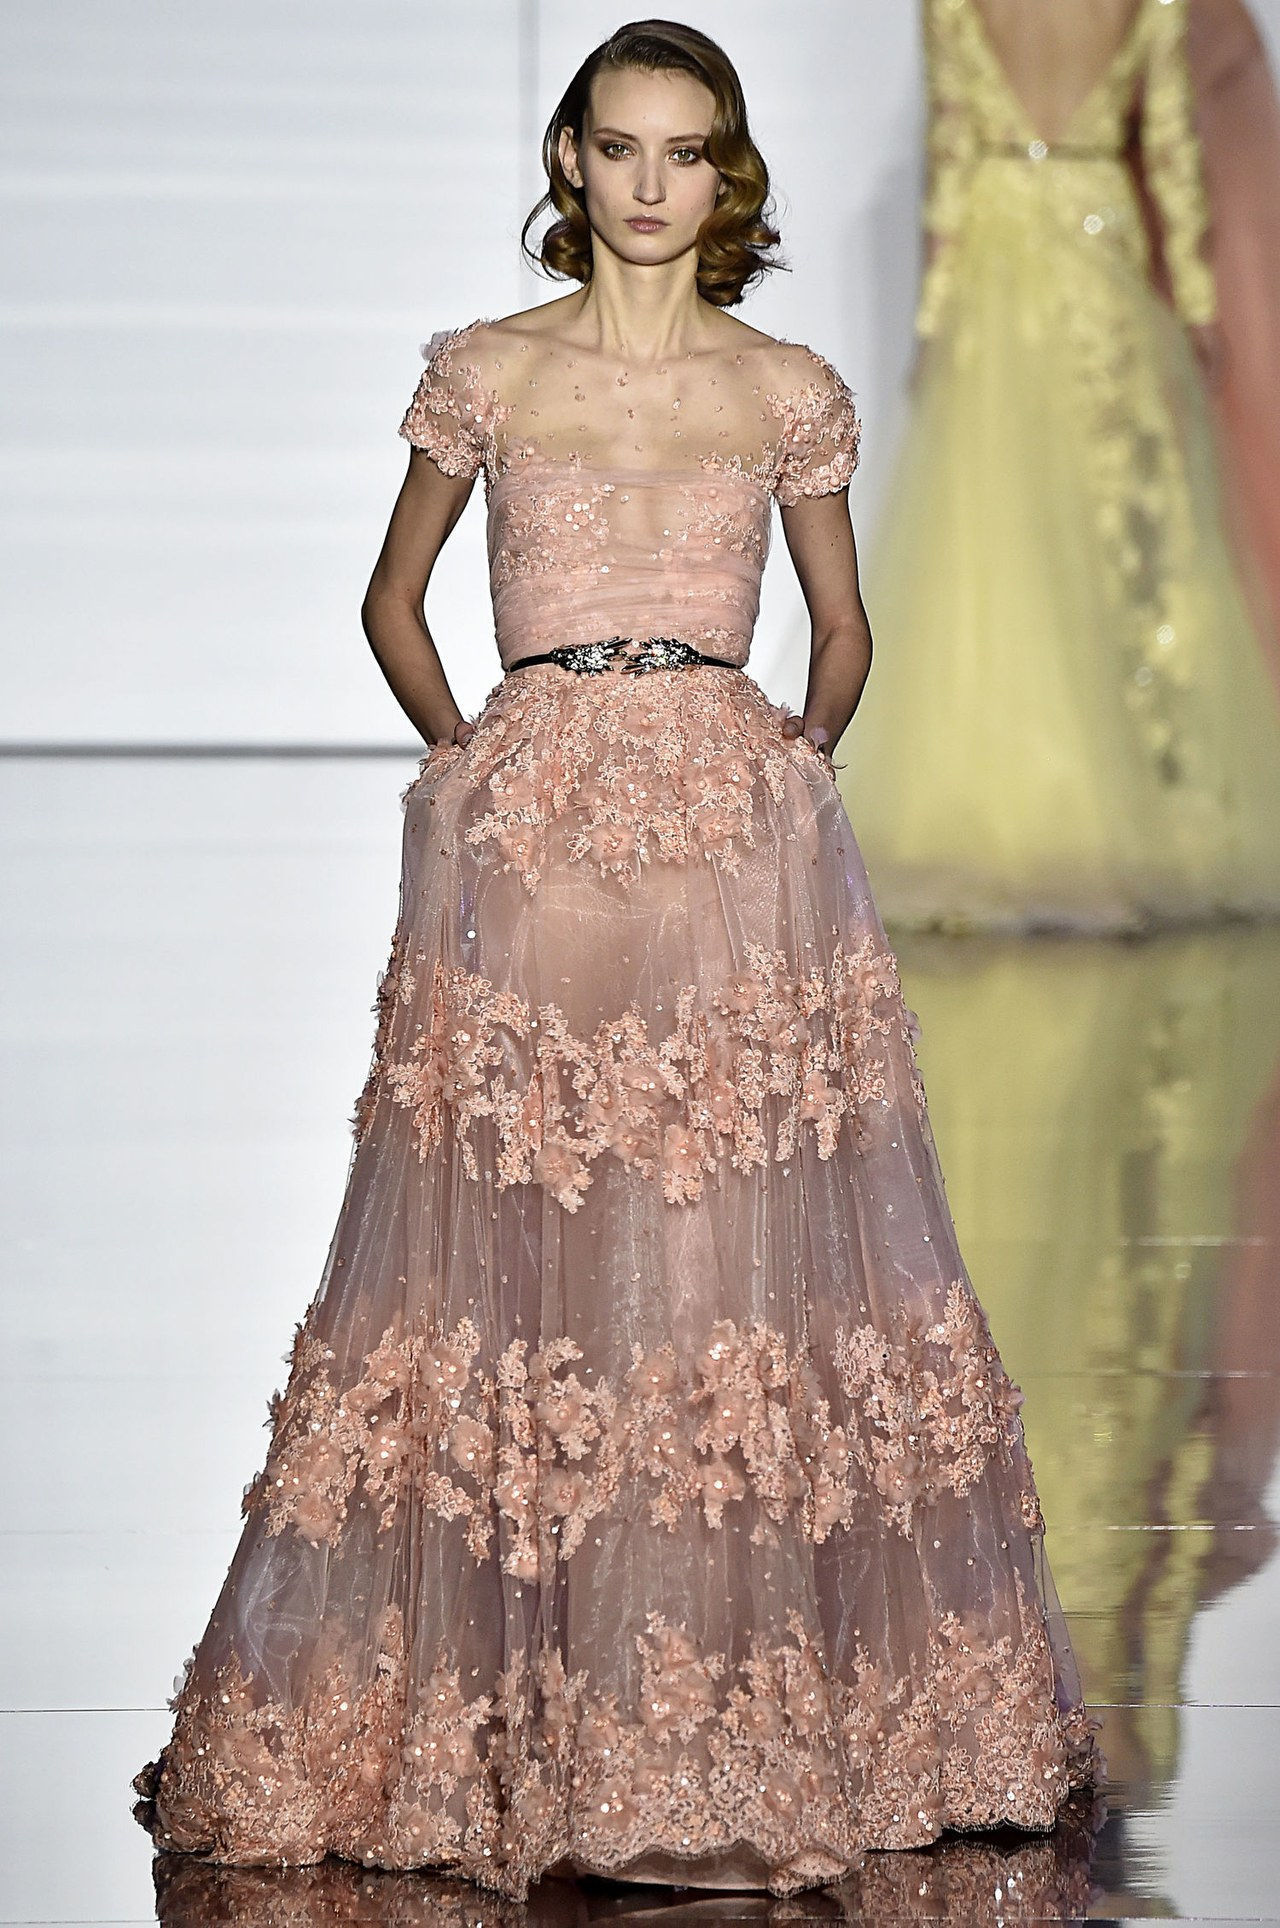 زهير murad pink peach couture spring 2015 runway gown